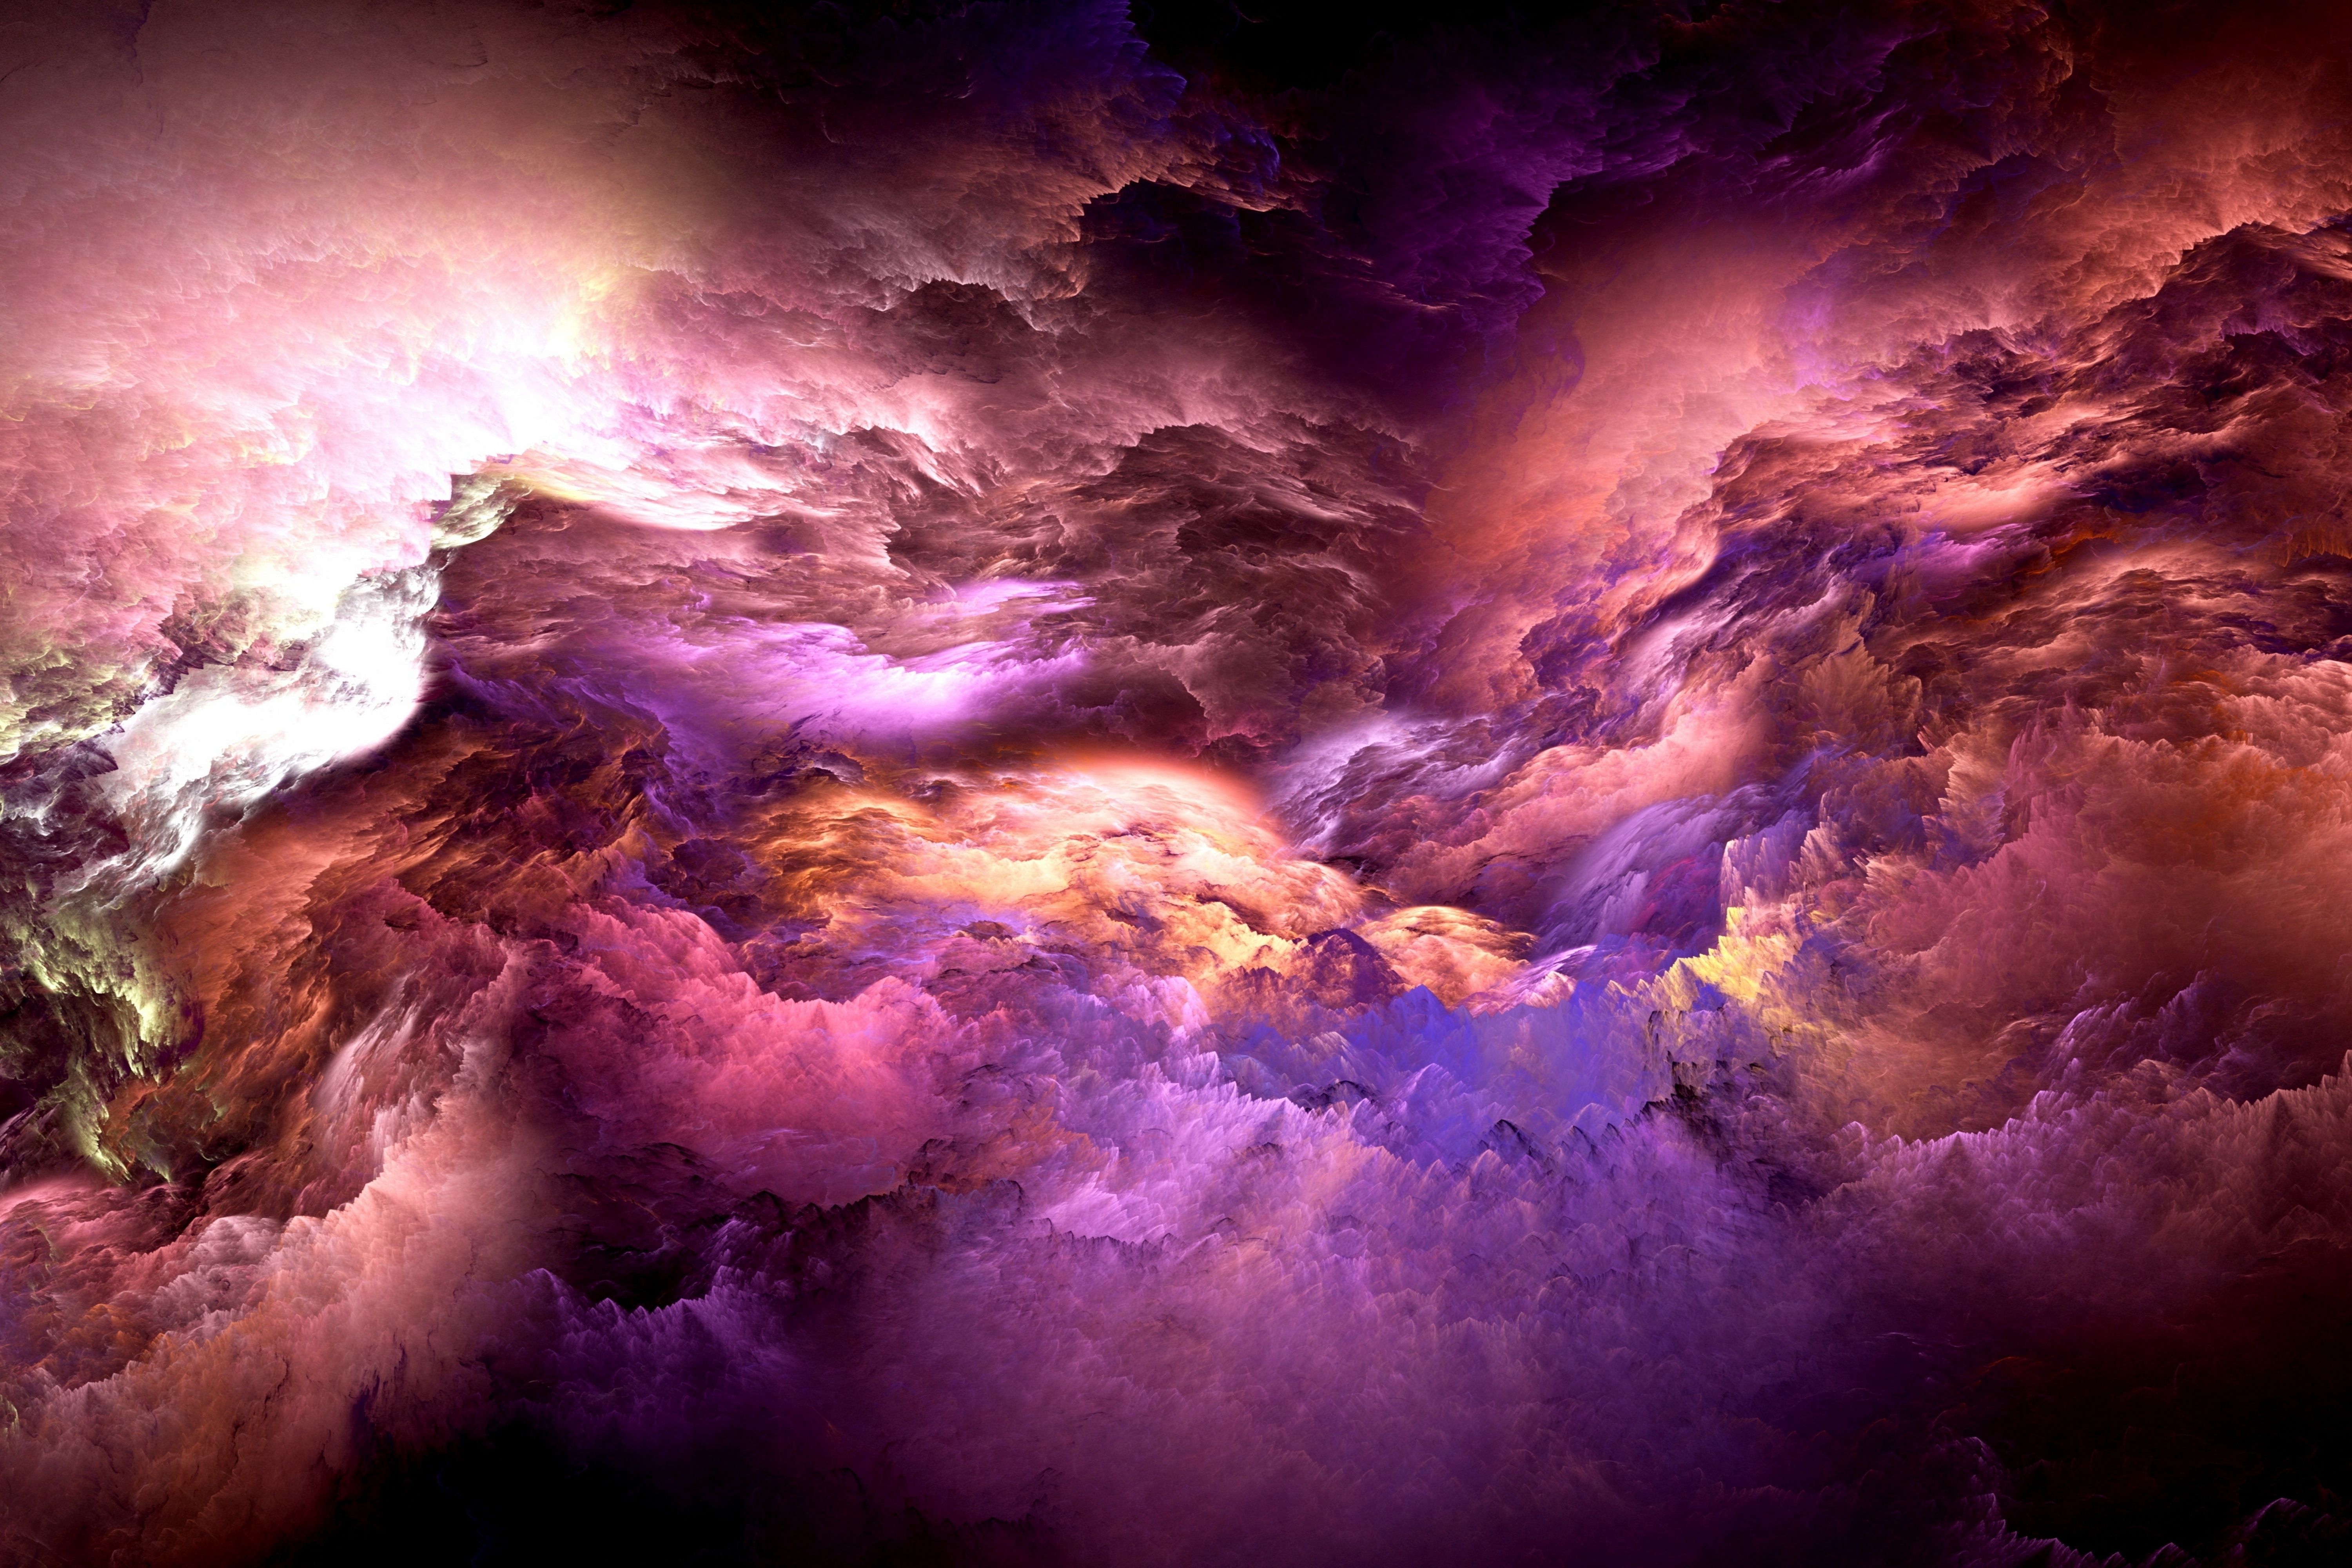 Abstract Cloud 5k Retina Ultra HD Wallpaper. Background Image